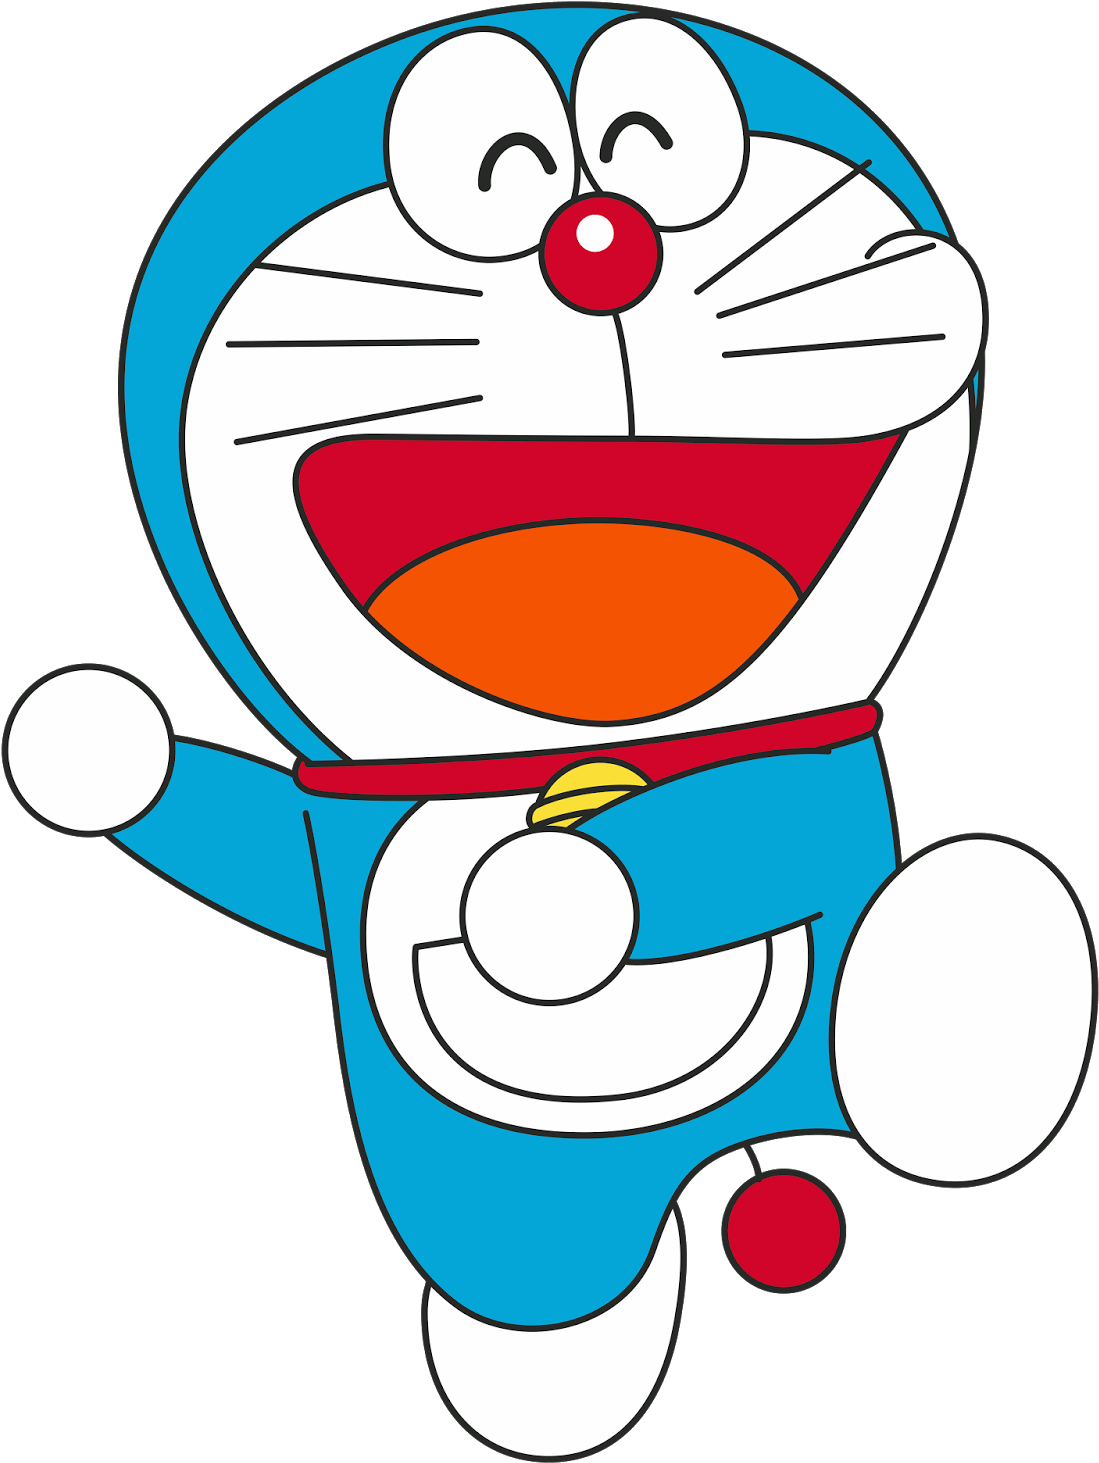 Doraemon Full HD iPhone Wallpapers - Wallpaper Cave